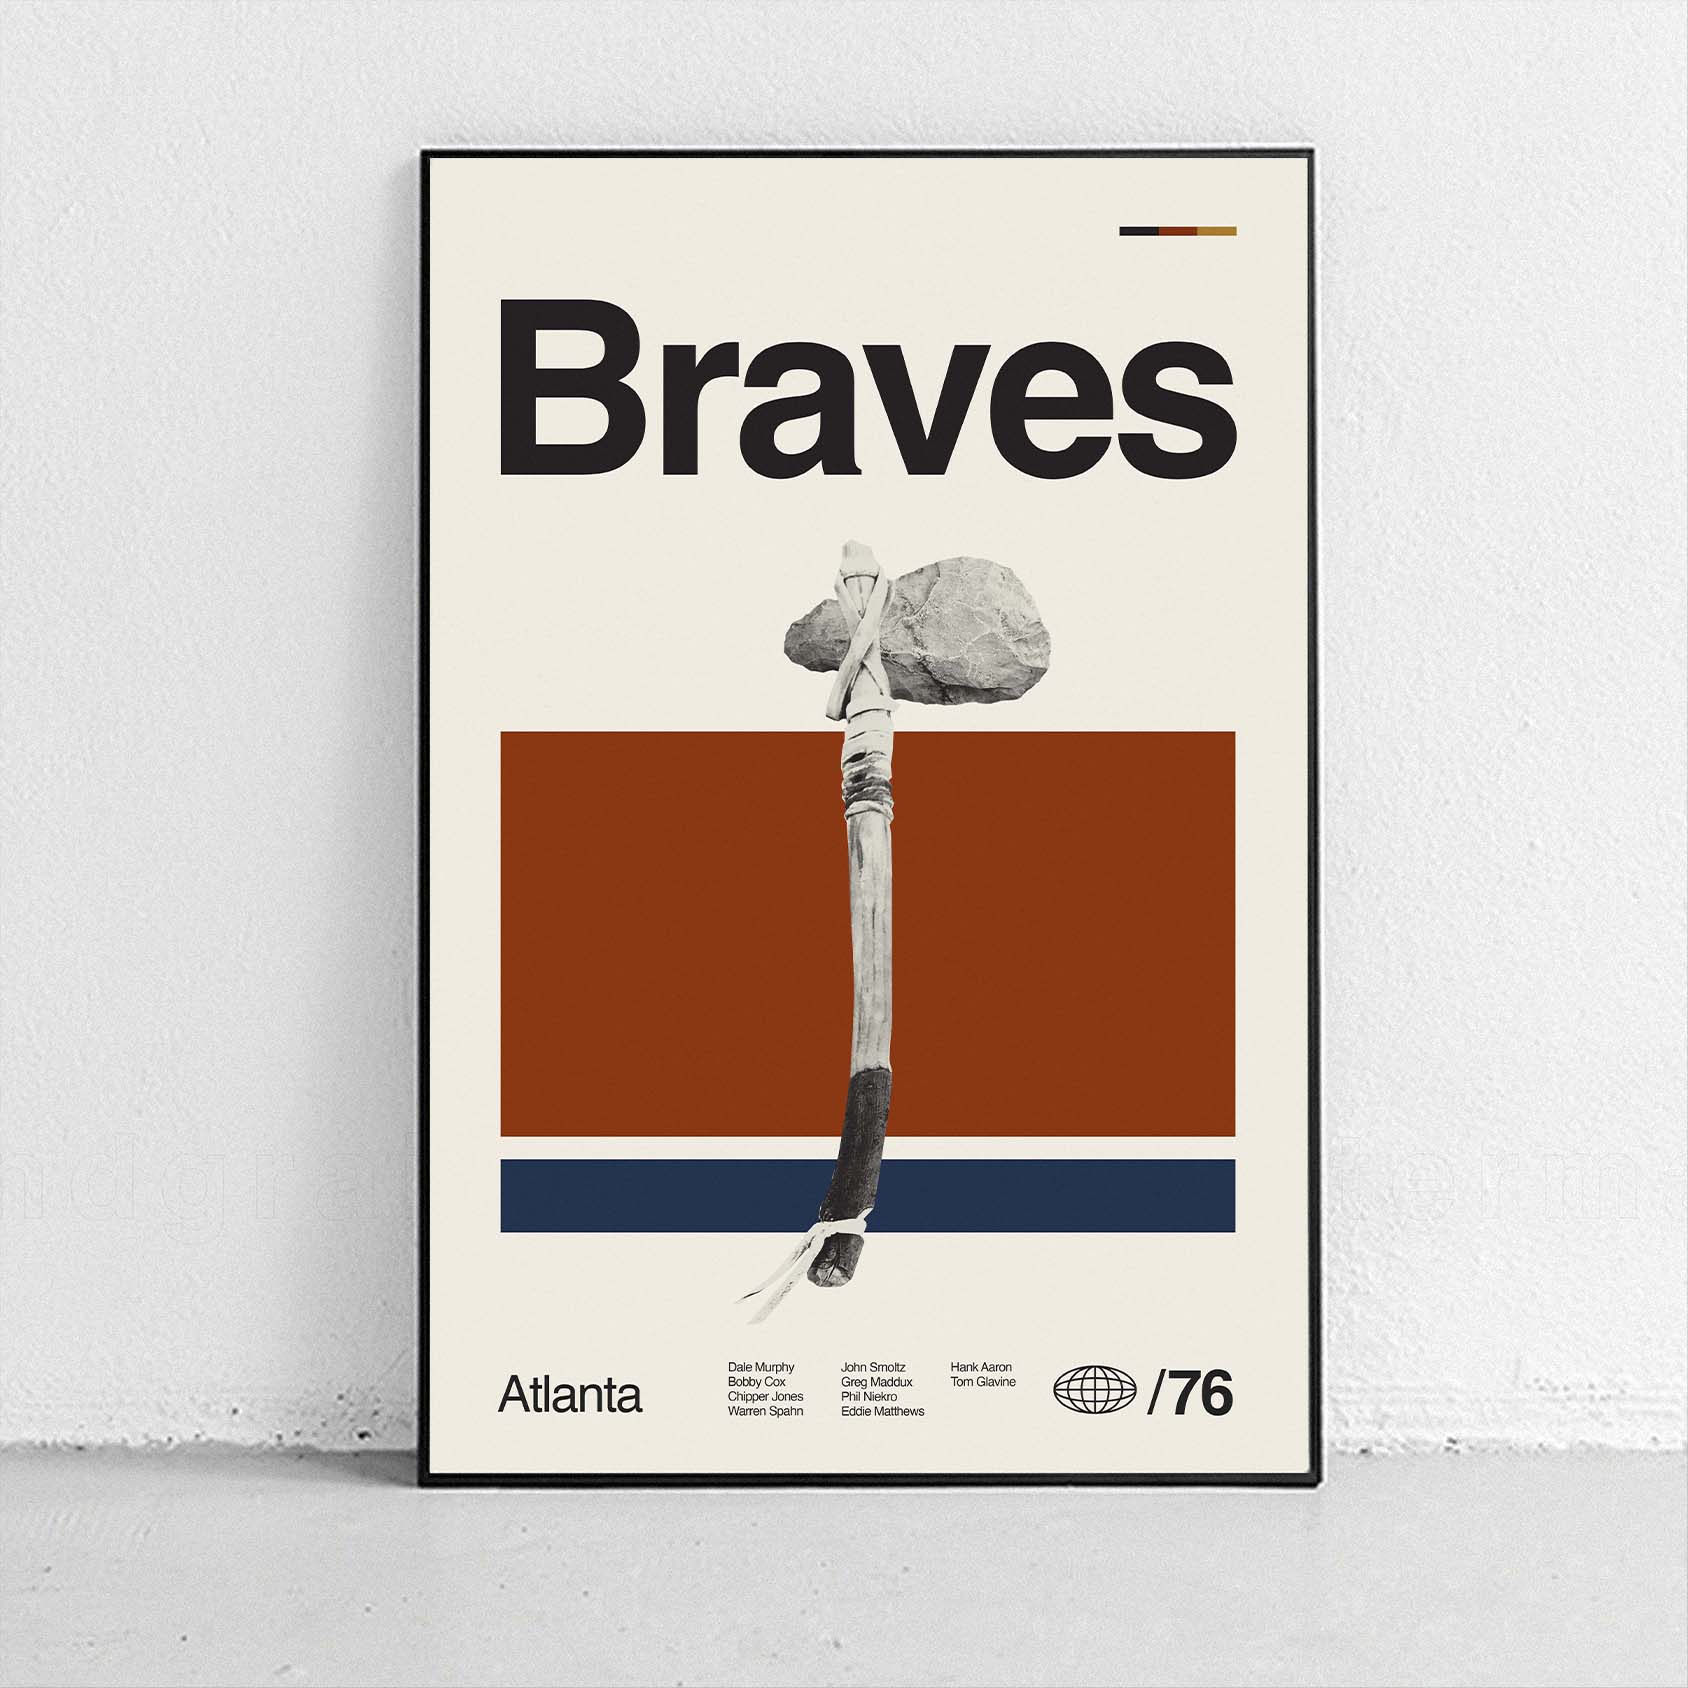 Atlanta Braves - A modern take on a timeless classic.